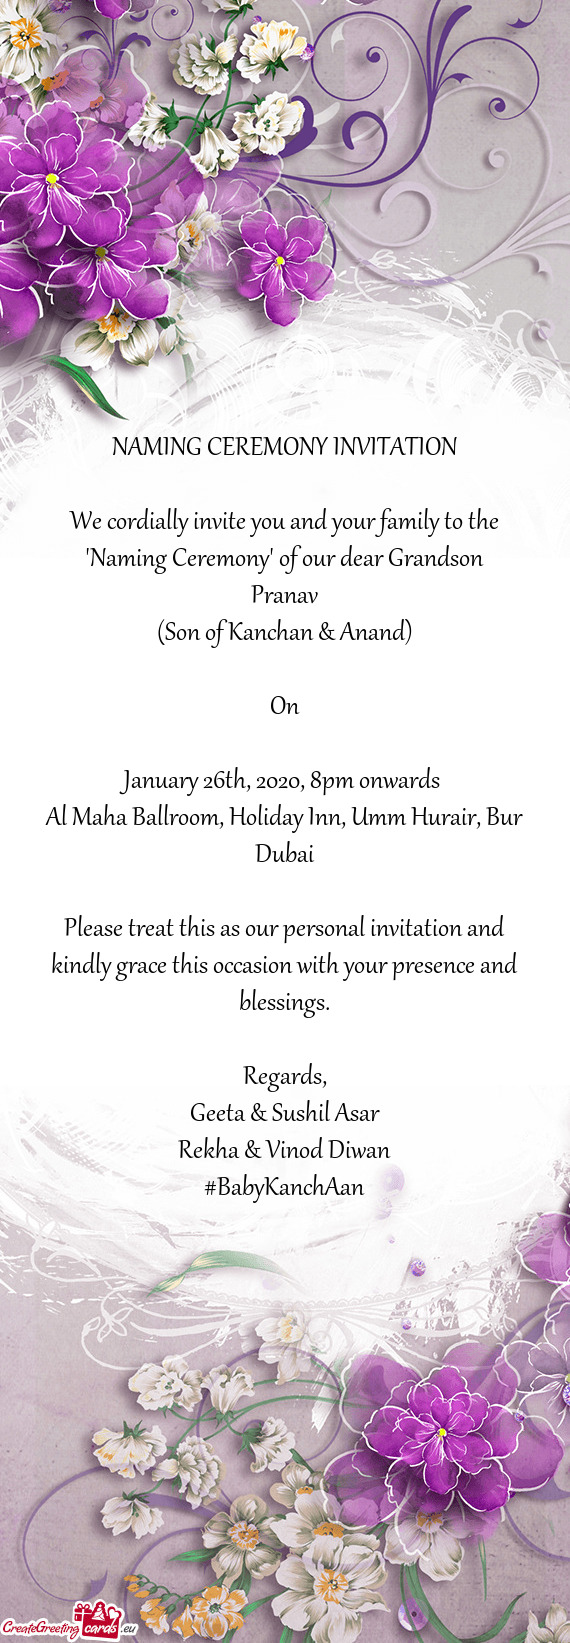 R dear Grandson
 Pranav
 (Son of Kanchan & Anand)
 
 On
 
 January 26th